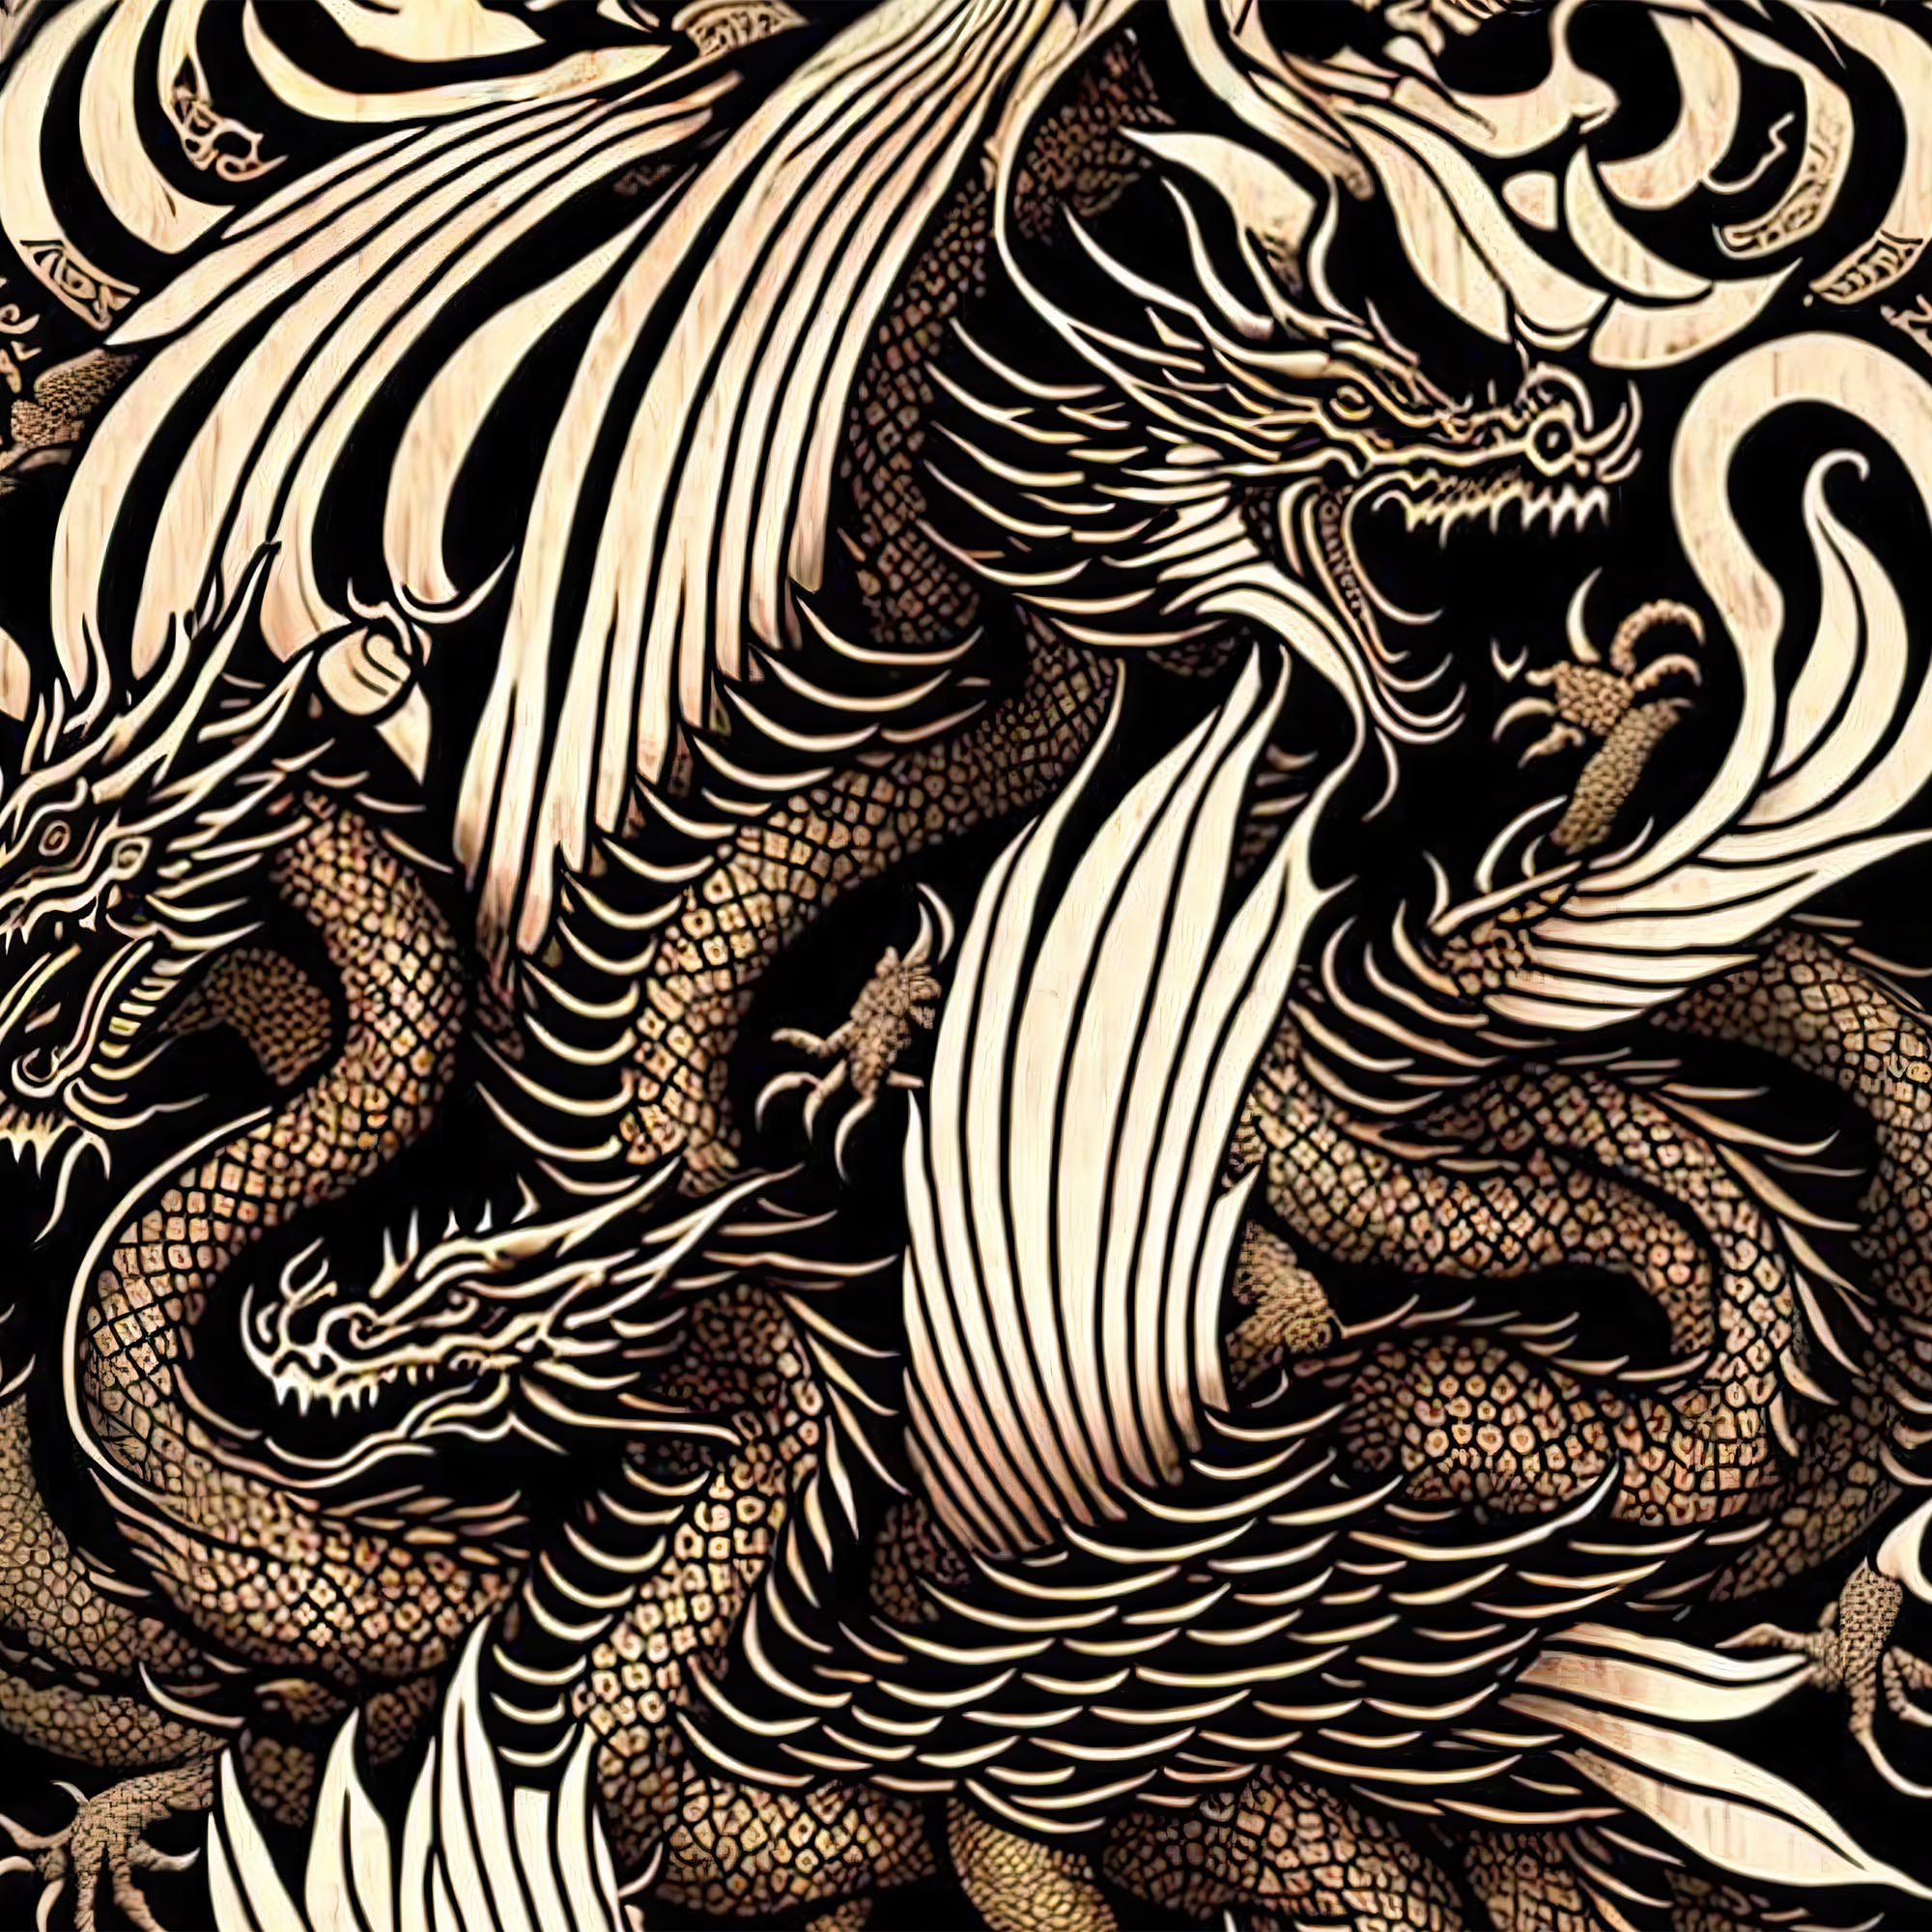 T-shirt Medieval Basilisk: Ancient Greek Mythology | King of Serpents, Snakes | Golden Scaled Dragon, Reptile Graphic Art T-Shirt